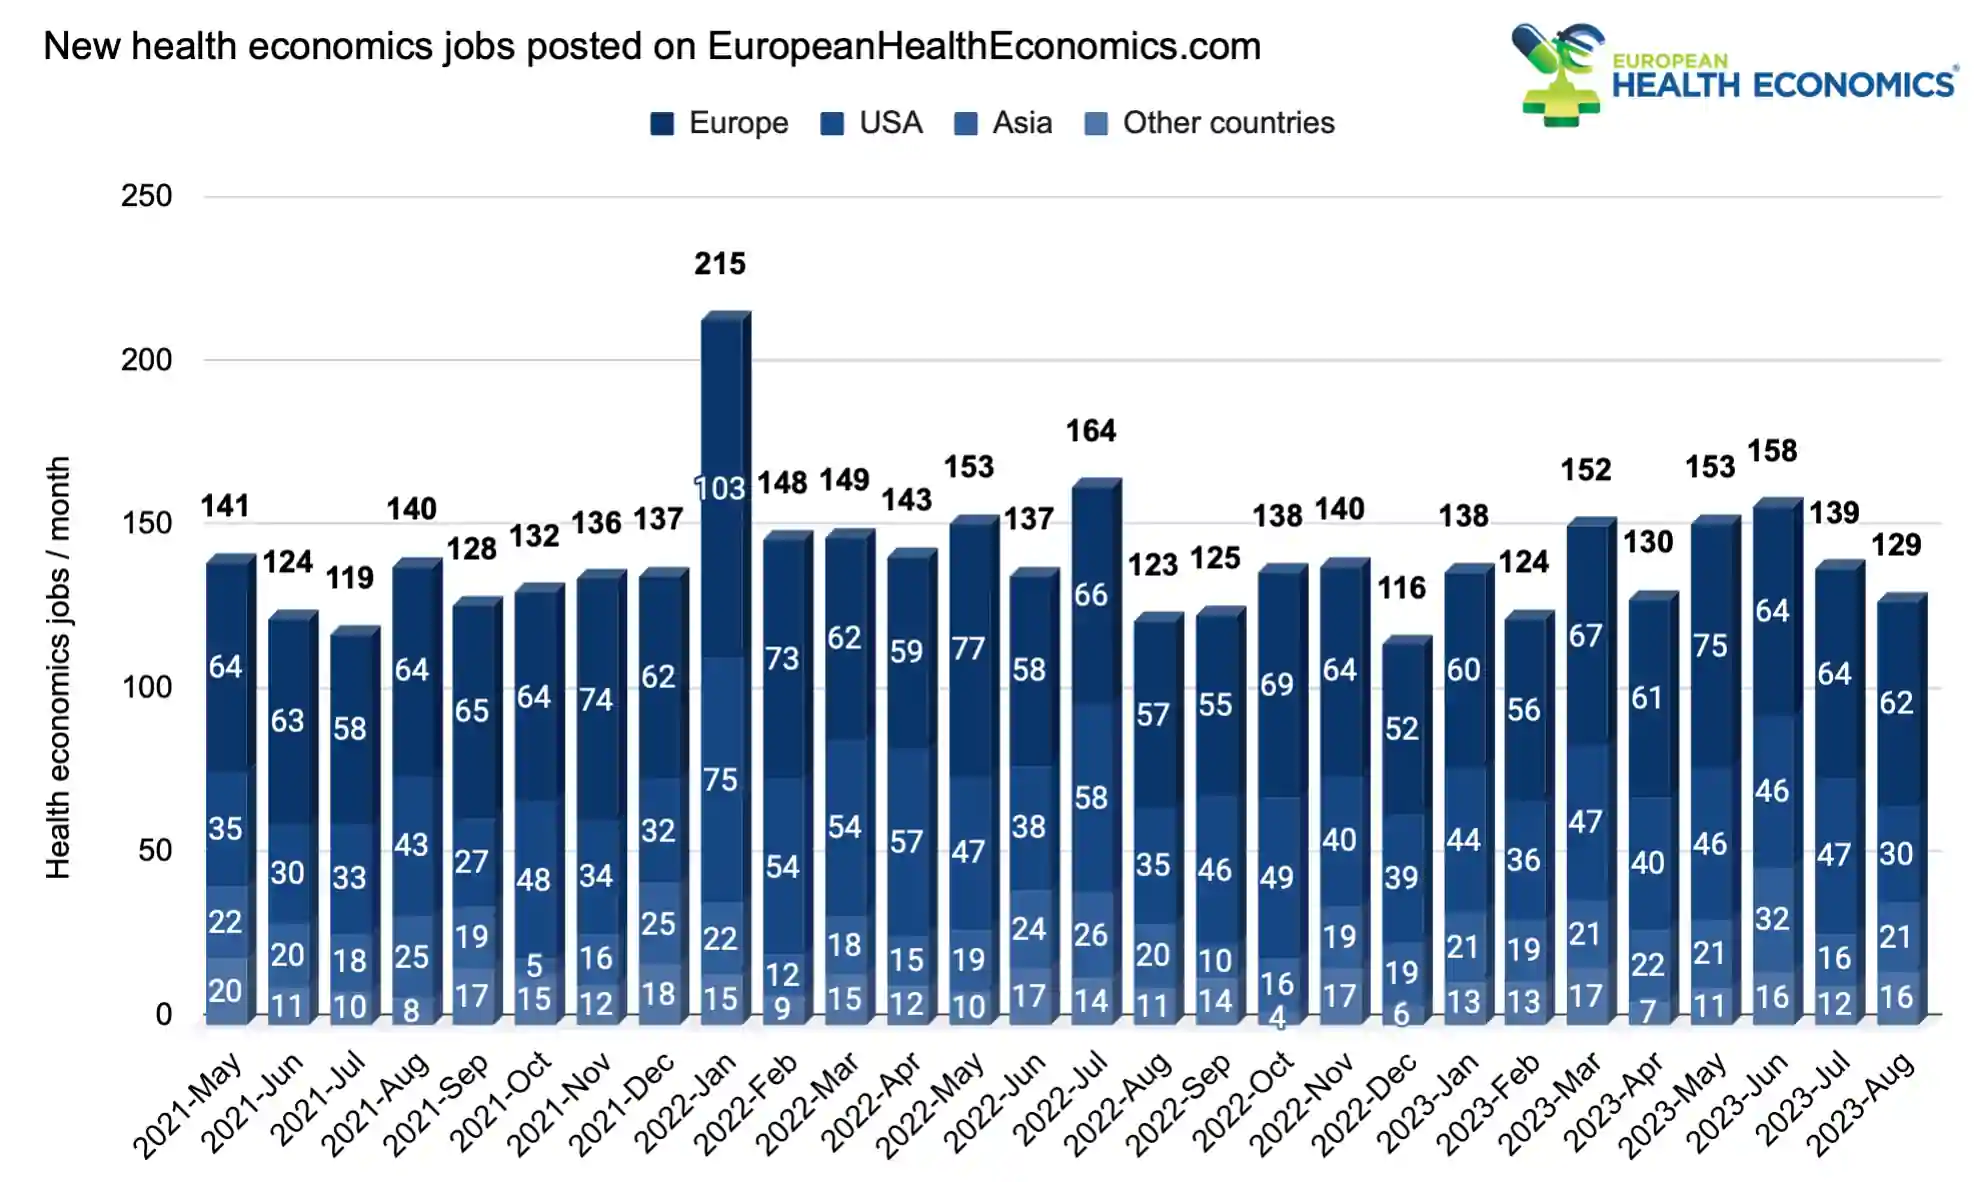 Total health economics jobs posted per month in Europeanhealtheconomics.com